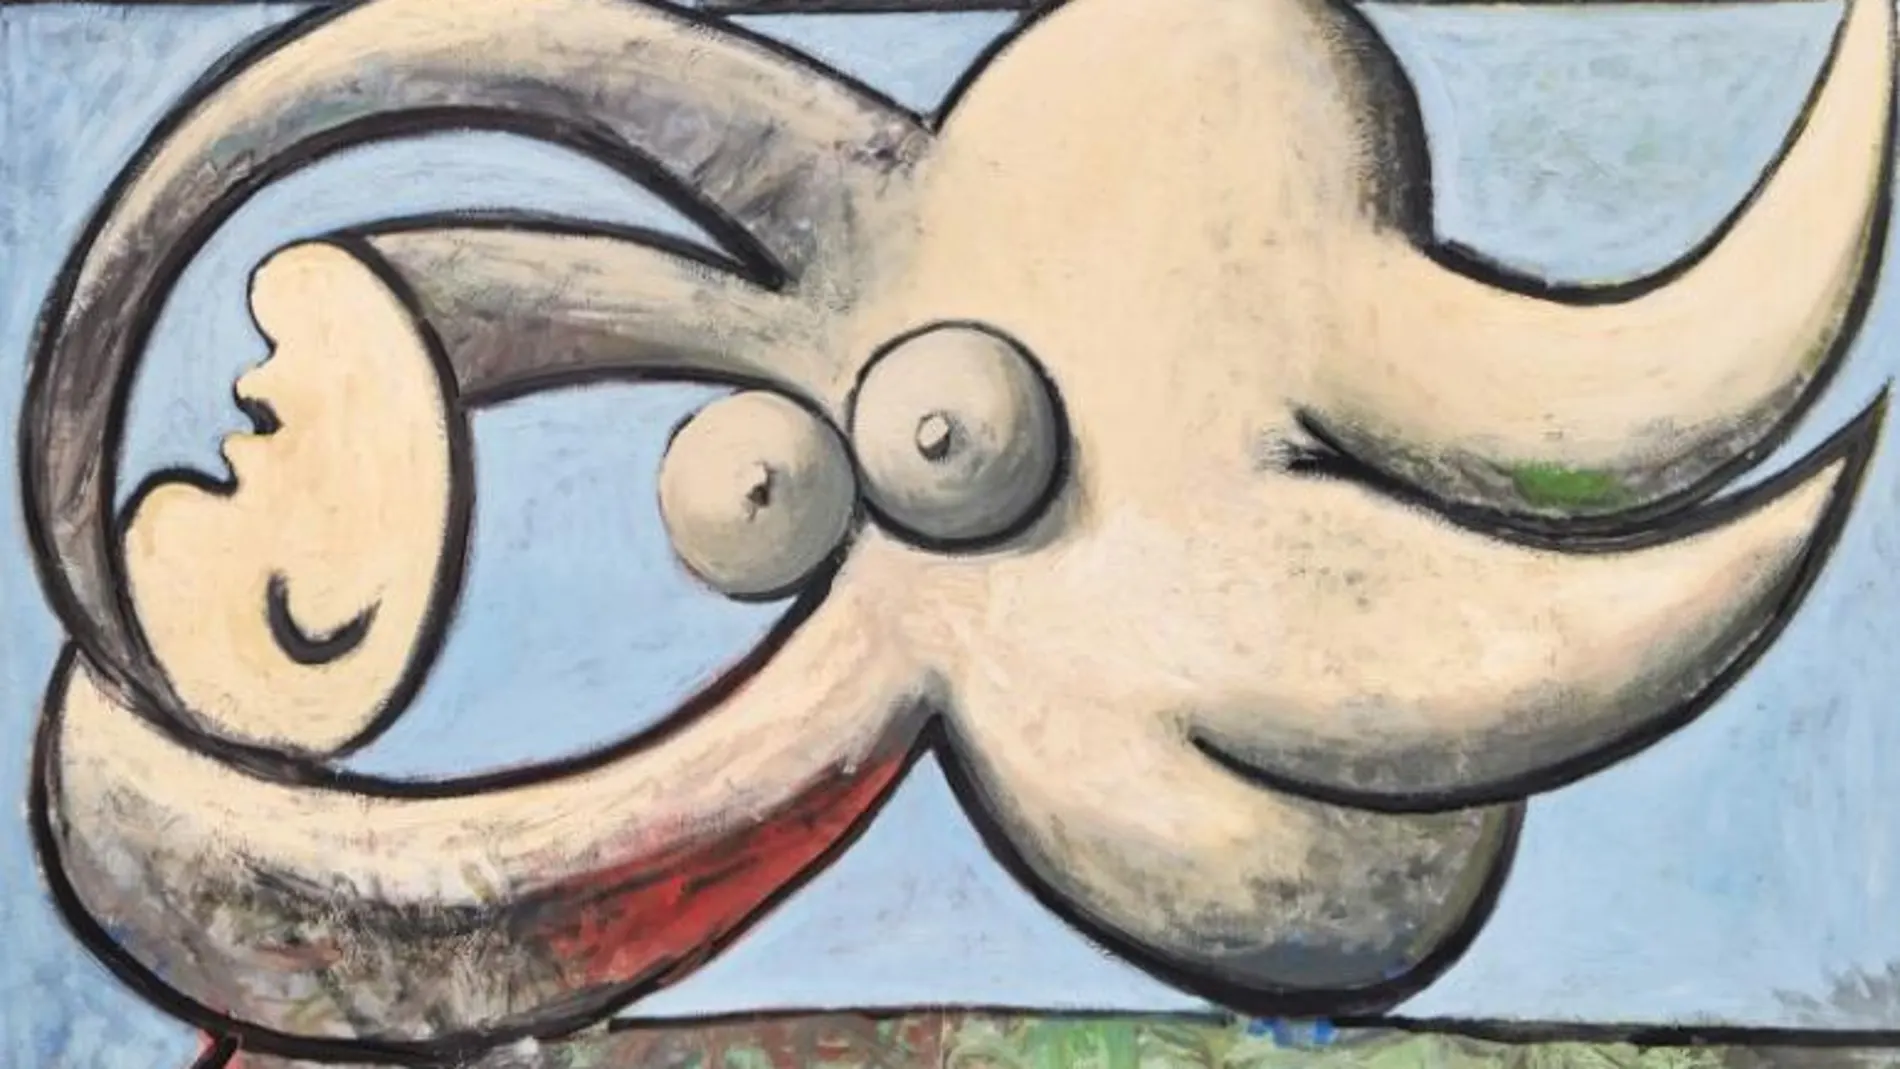 "Femme nue coucheé", original de Picasso.